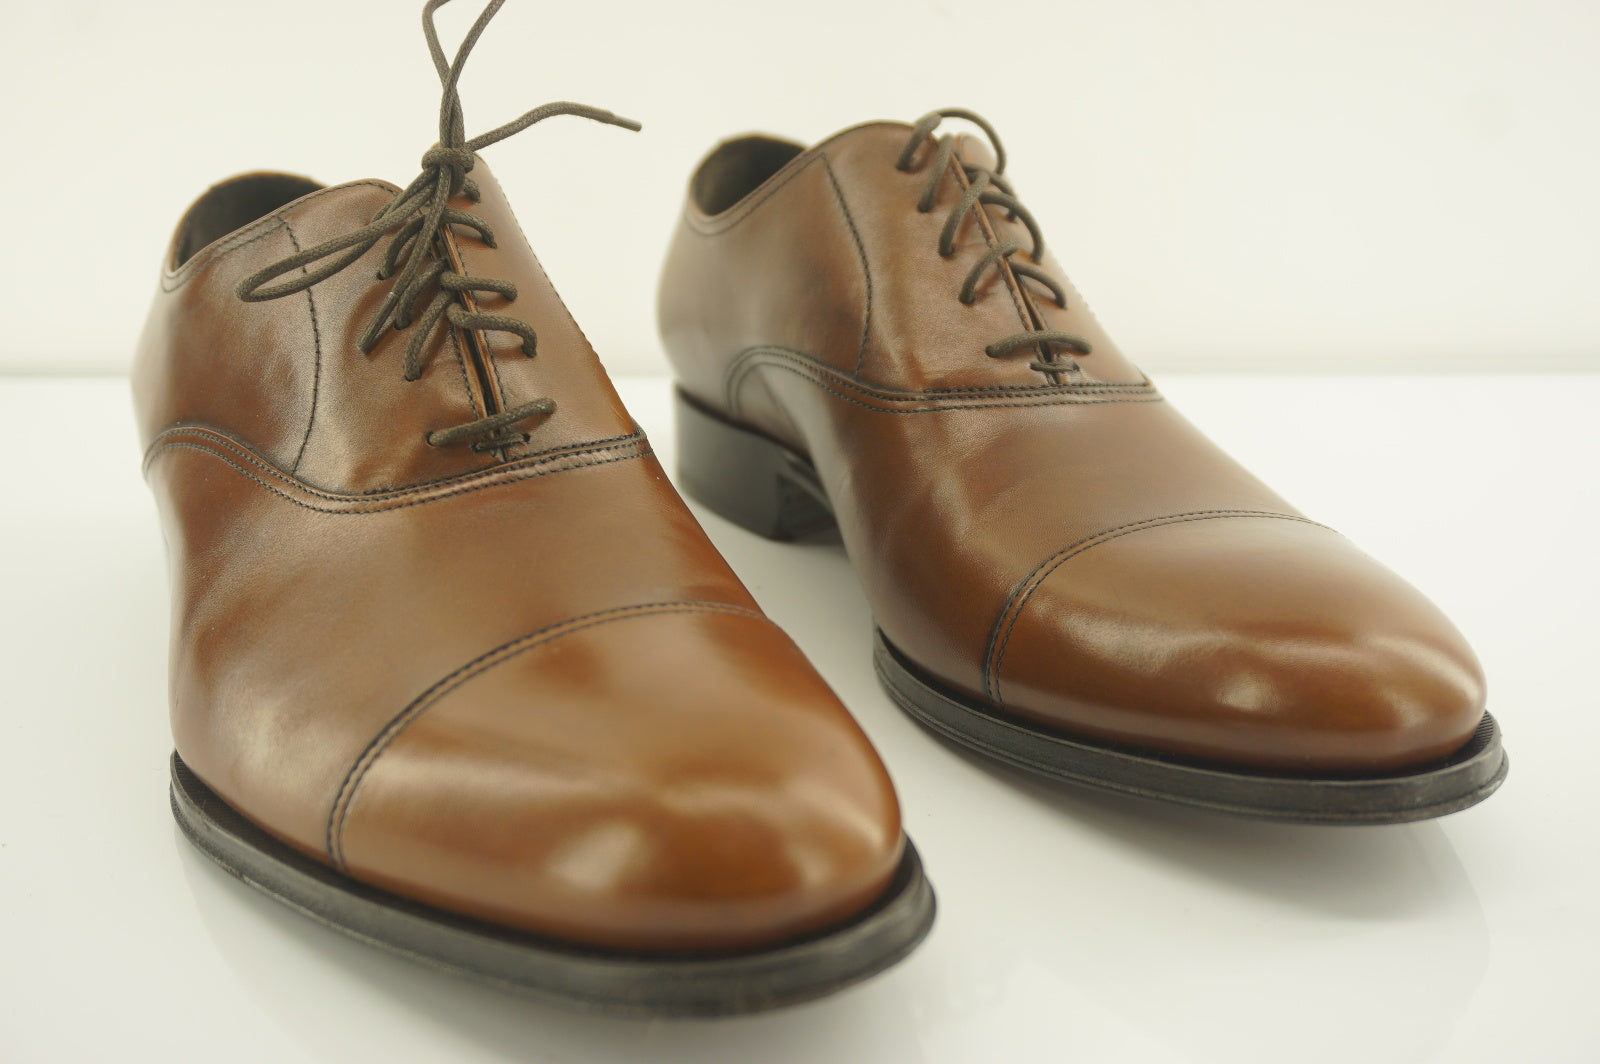 To Boot New York Brandon Brown Leather Oxford Shoes SZ 8.5 NIB $395 Adam Derrick